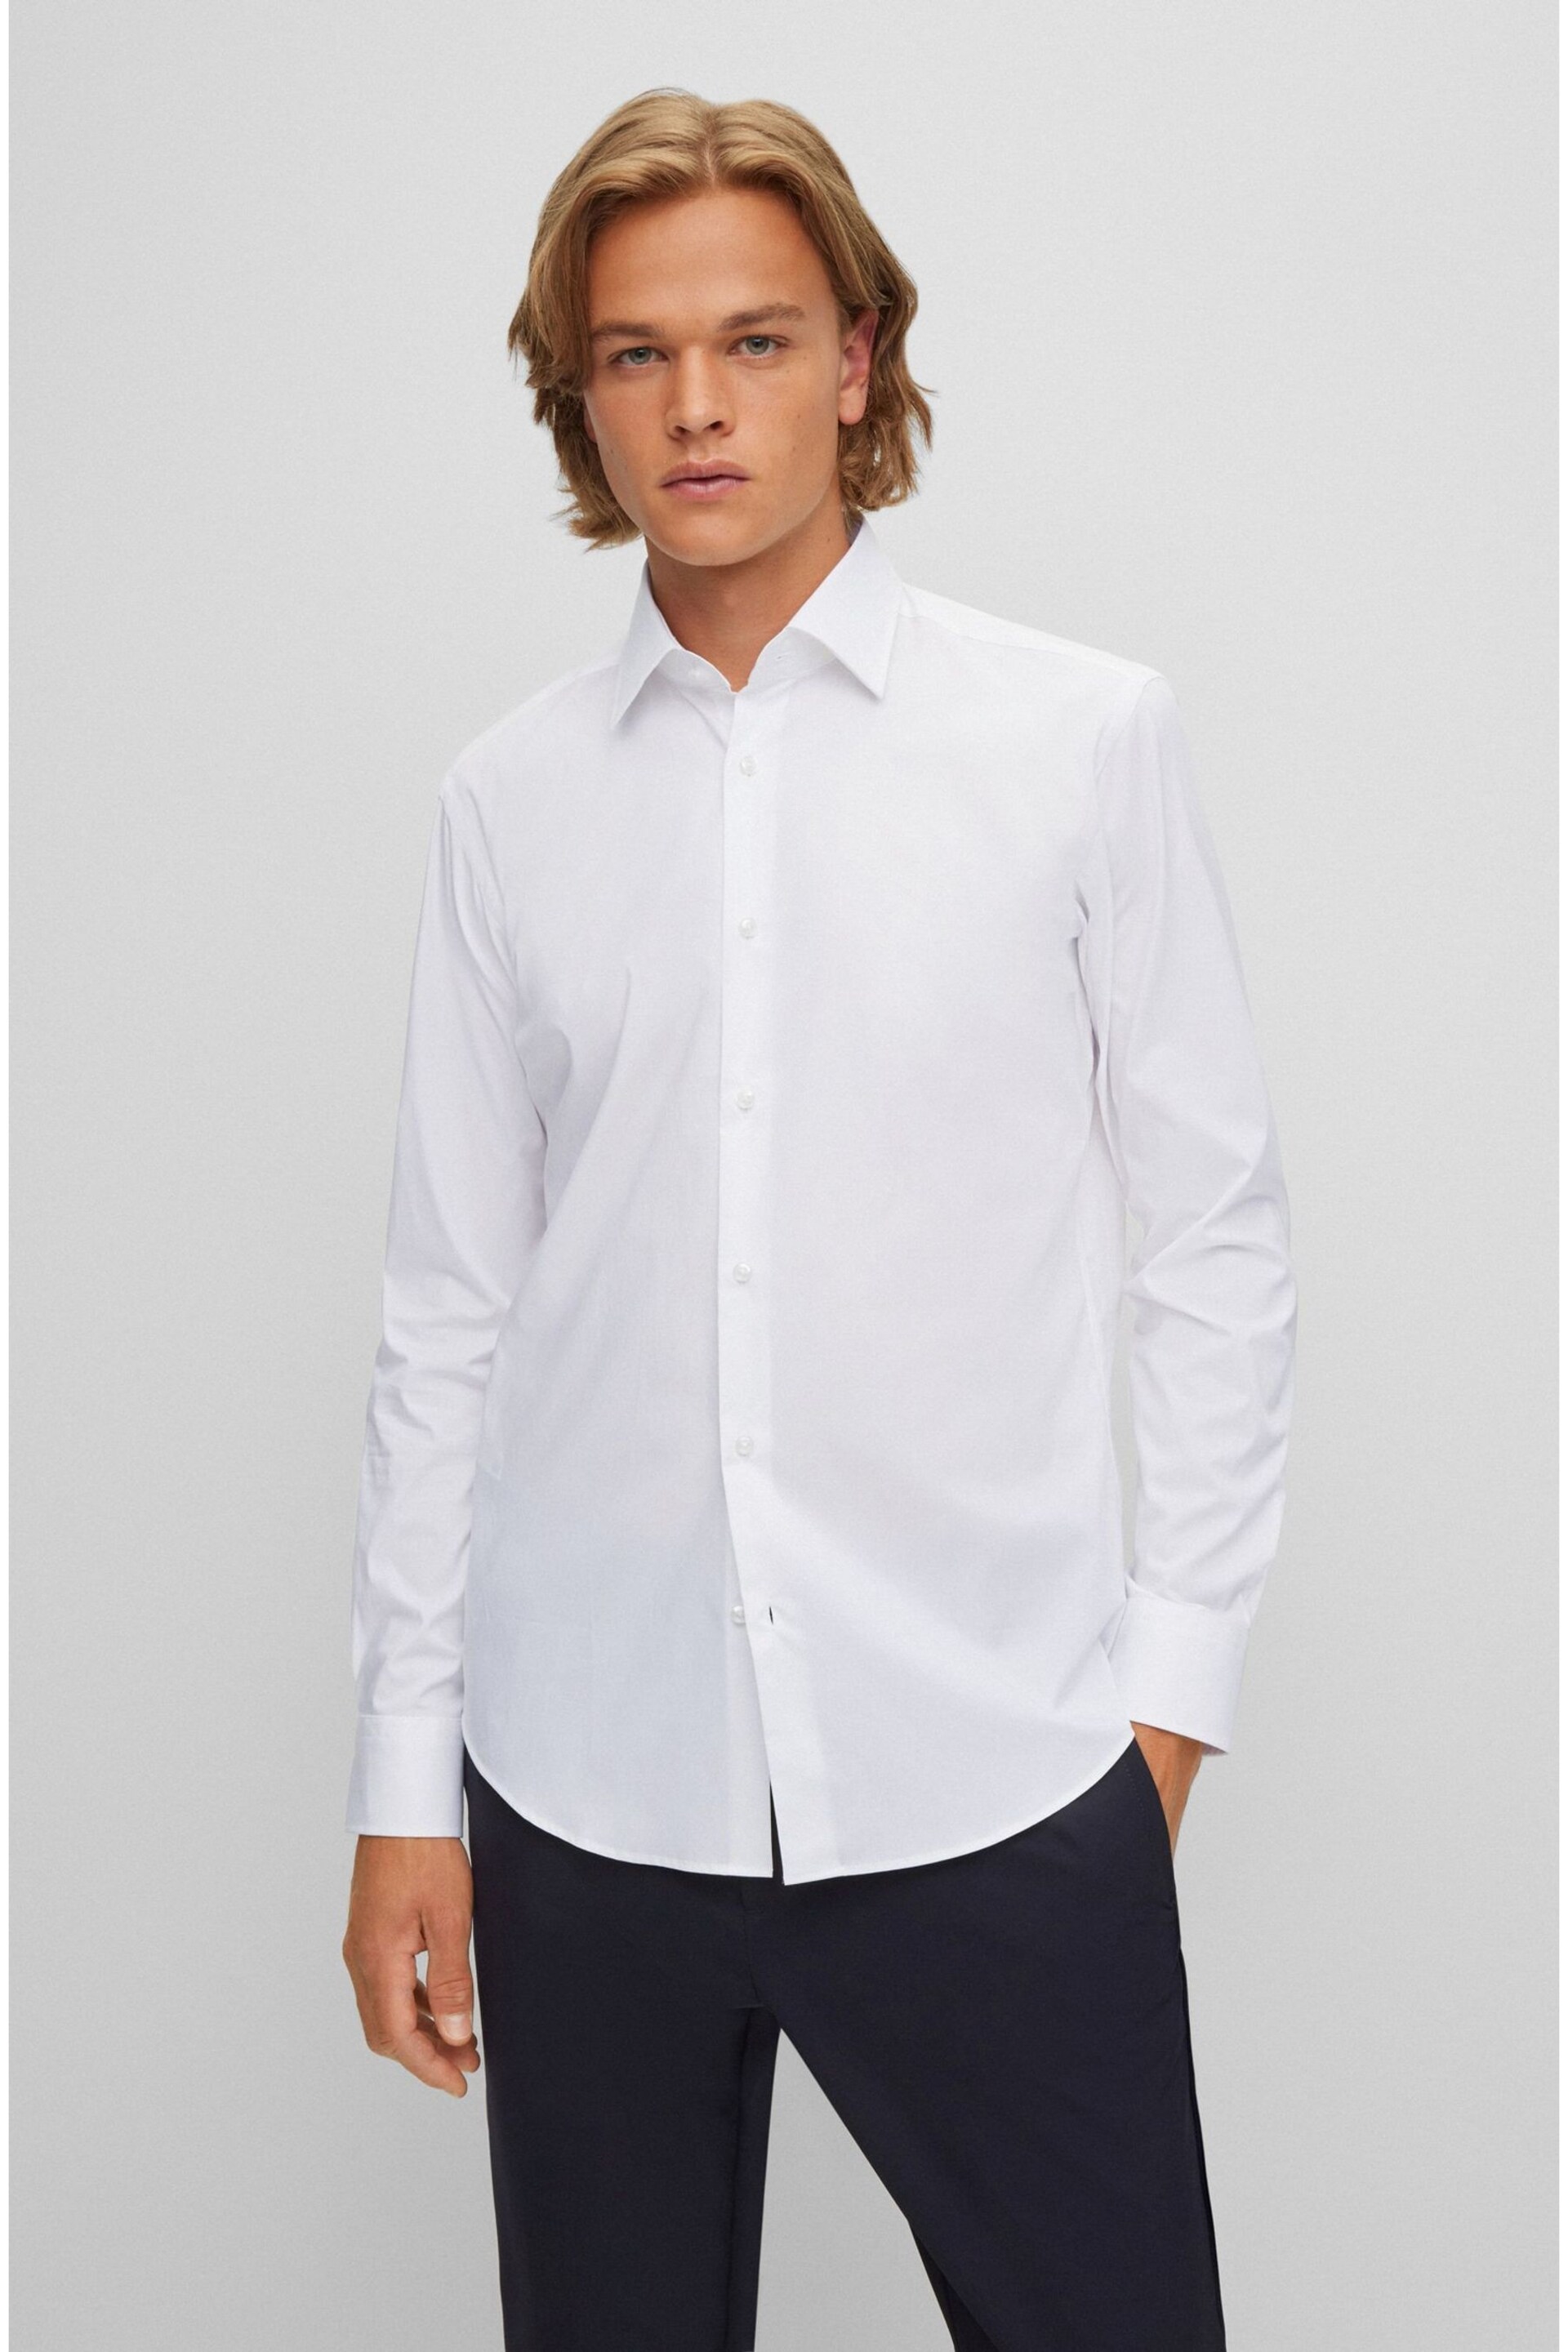 BOSS White Regular Fit Formal Shirt - Image 1 of 5